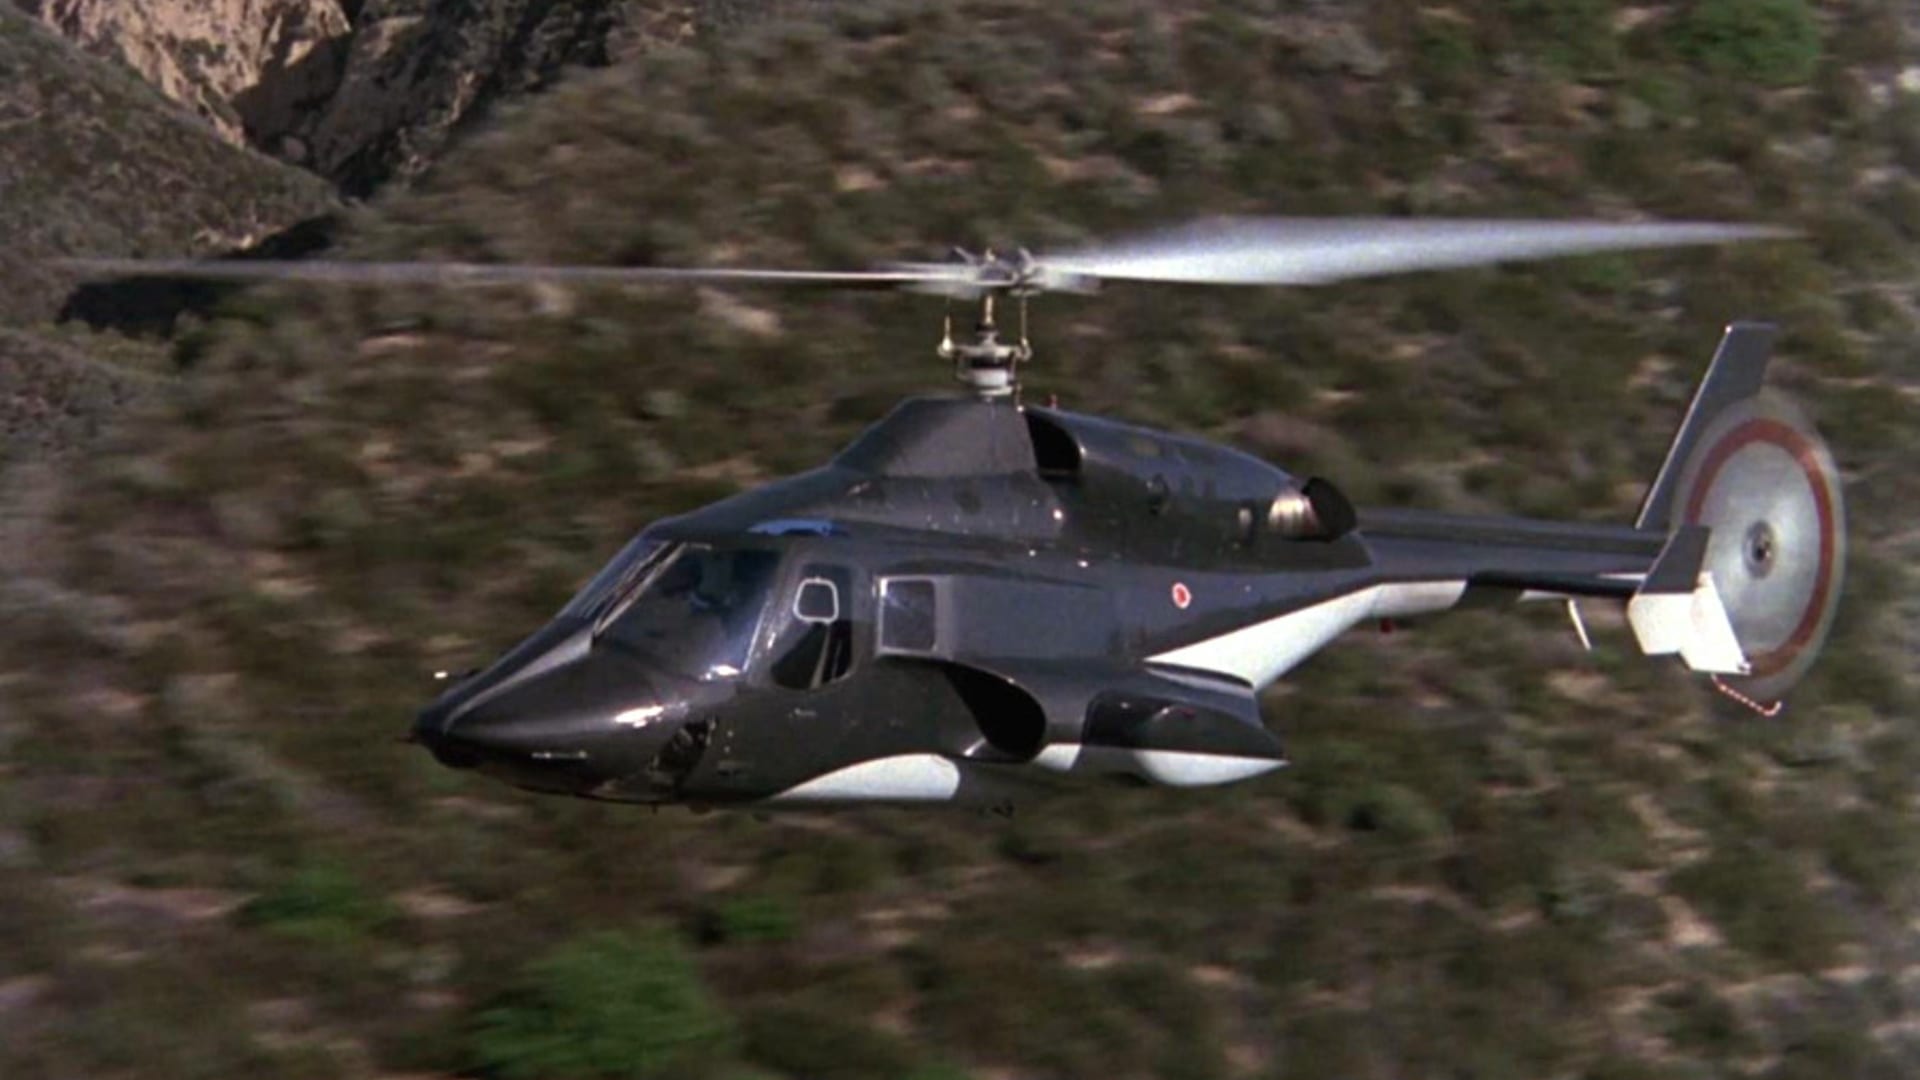 fond d'écran airwolf,hélicoptère,rotor d'hélicoptère,avion,véhicule,aviation